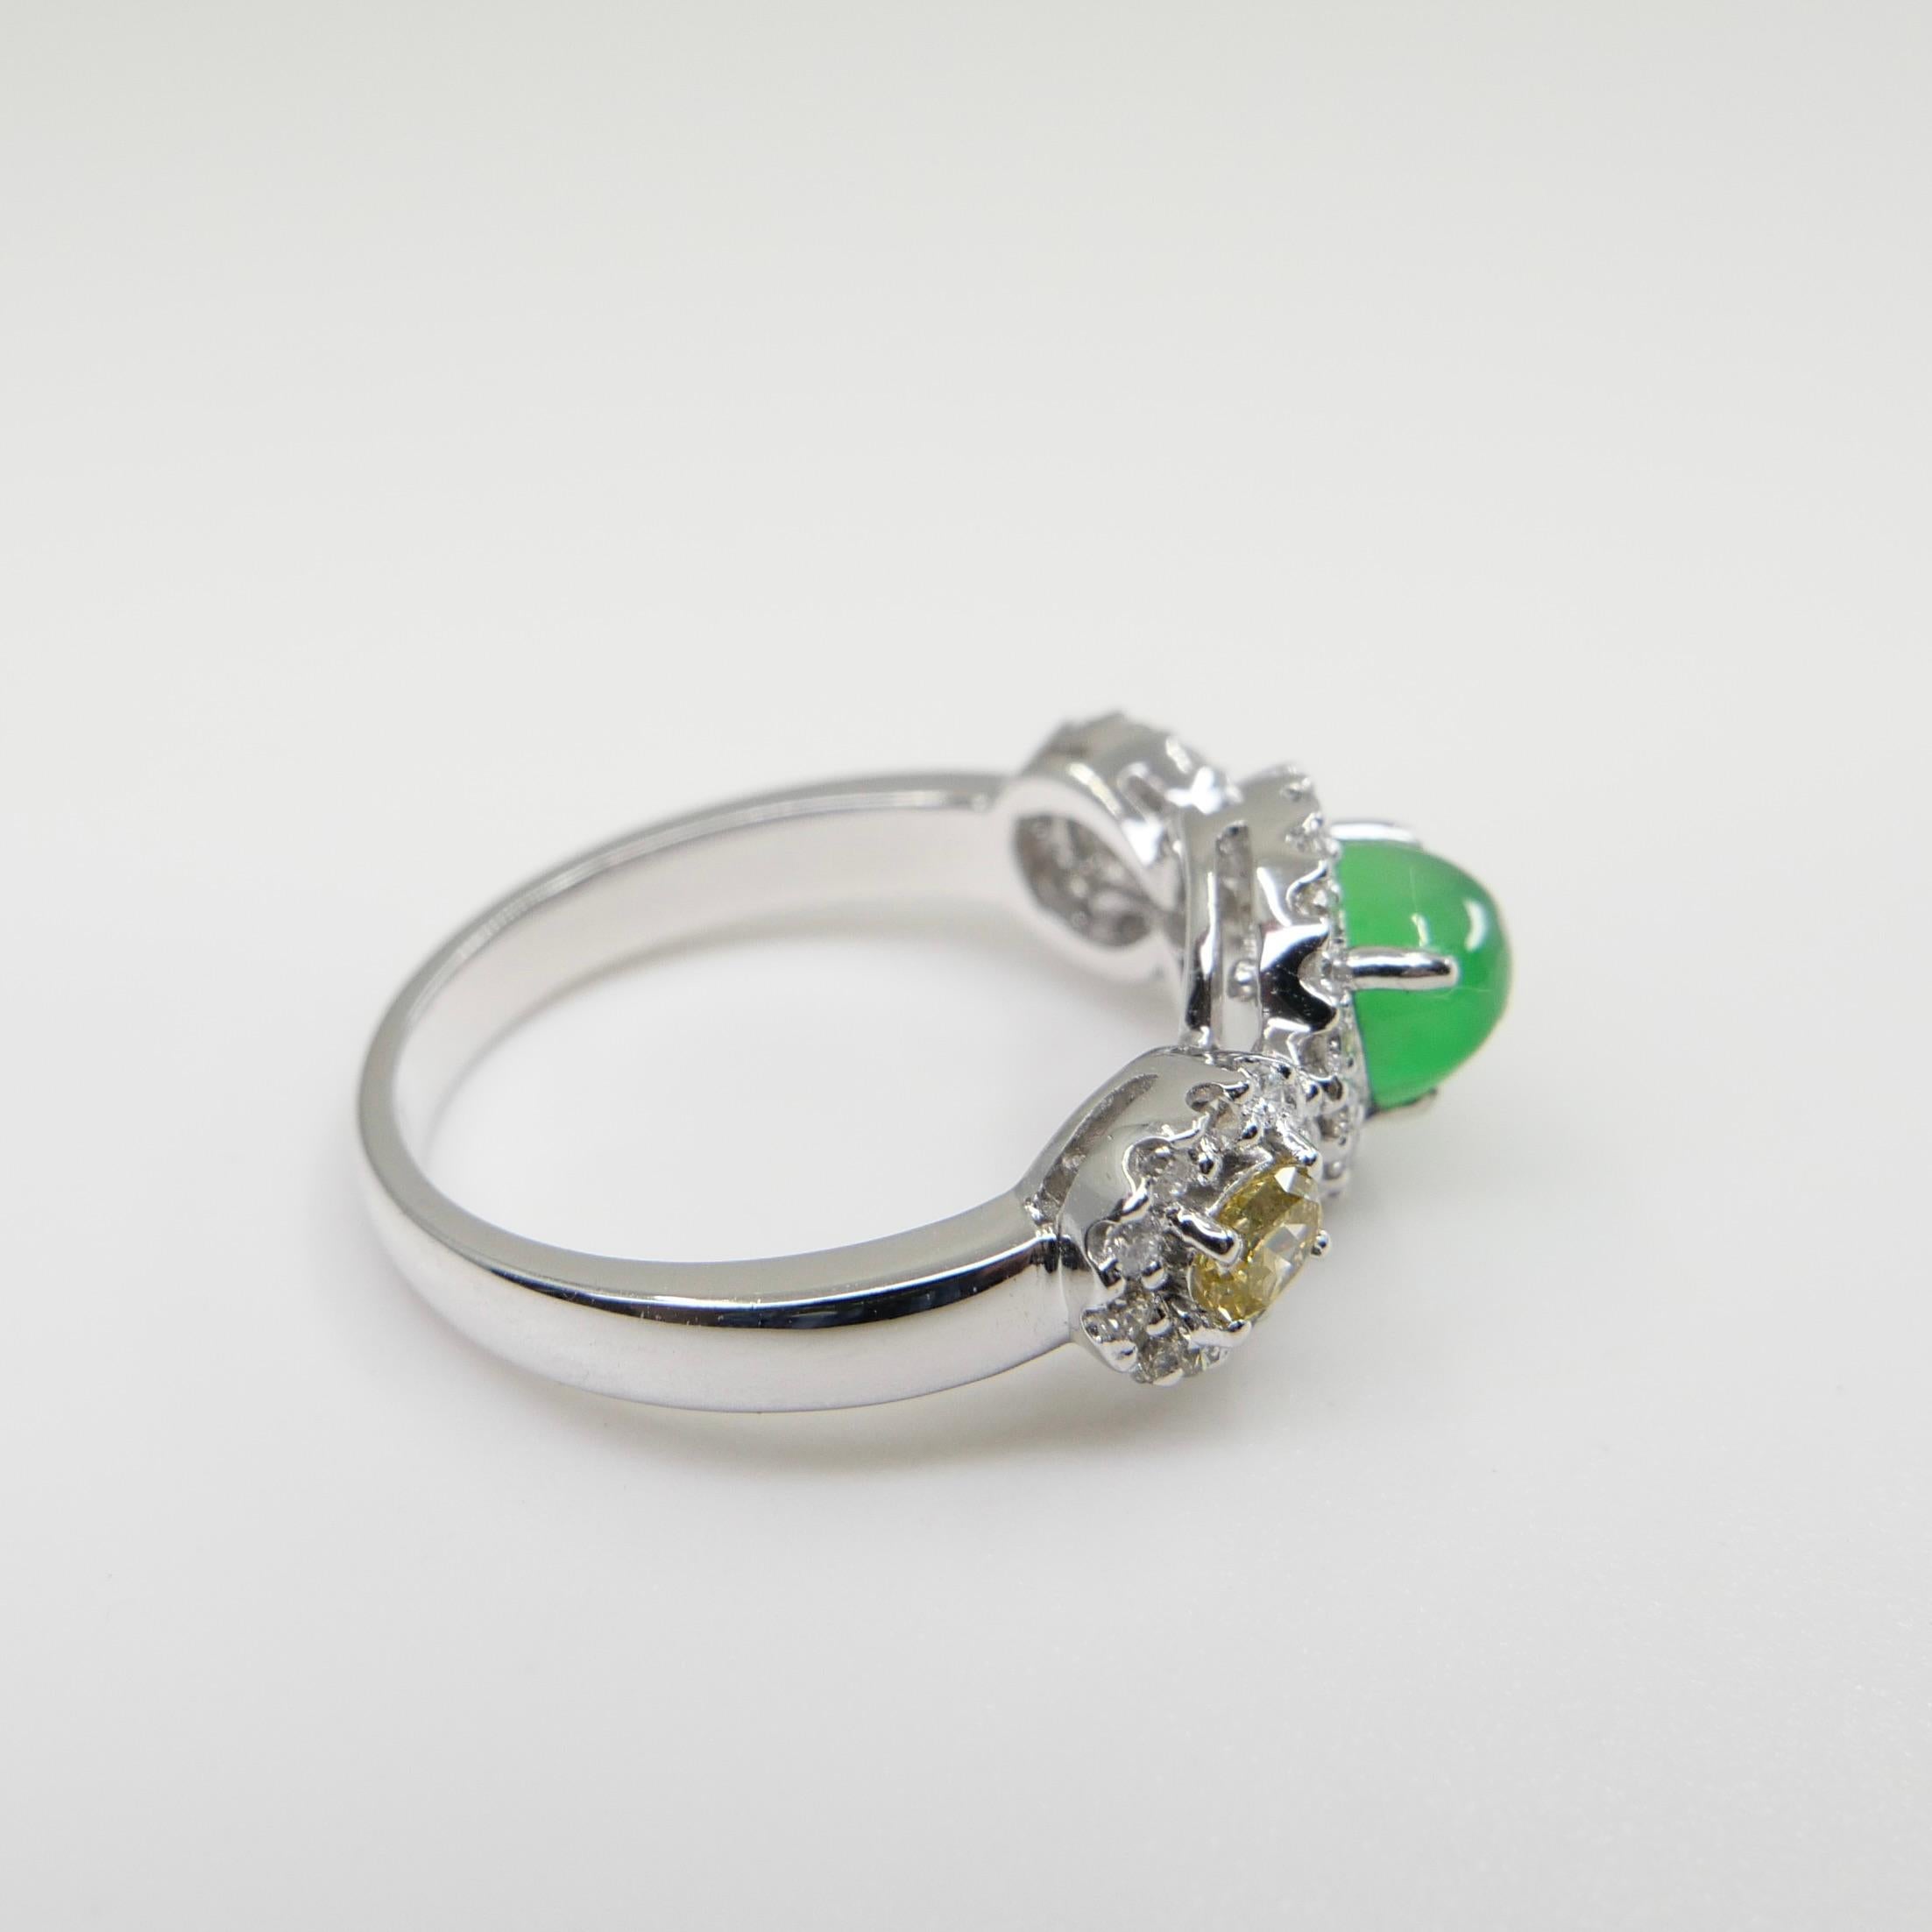 Certified Jade & Fancy Yellow Diamond Cocktail Ring, Glowing Apple Green Jade For Sale 10